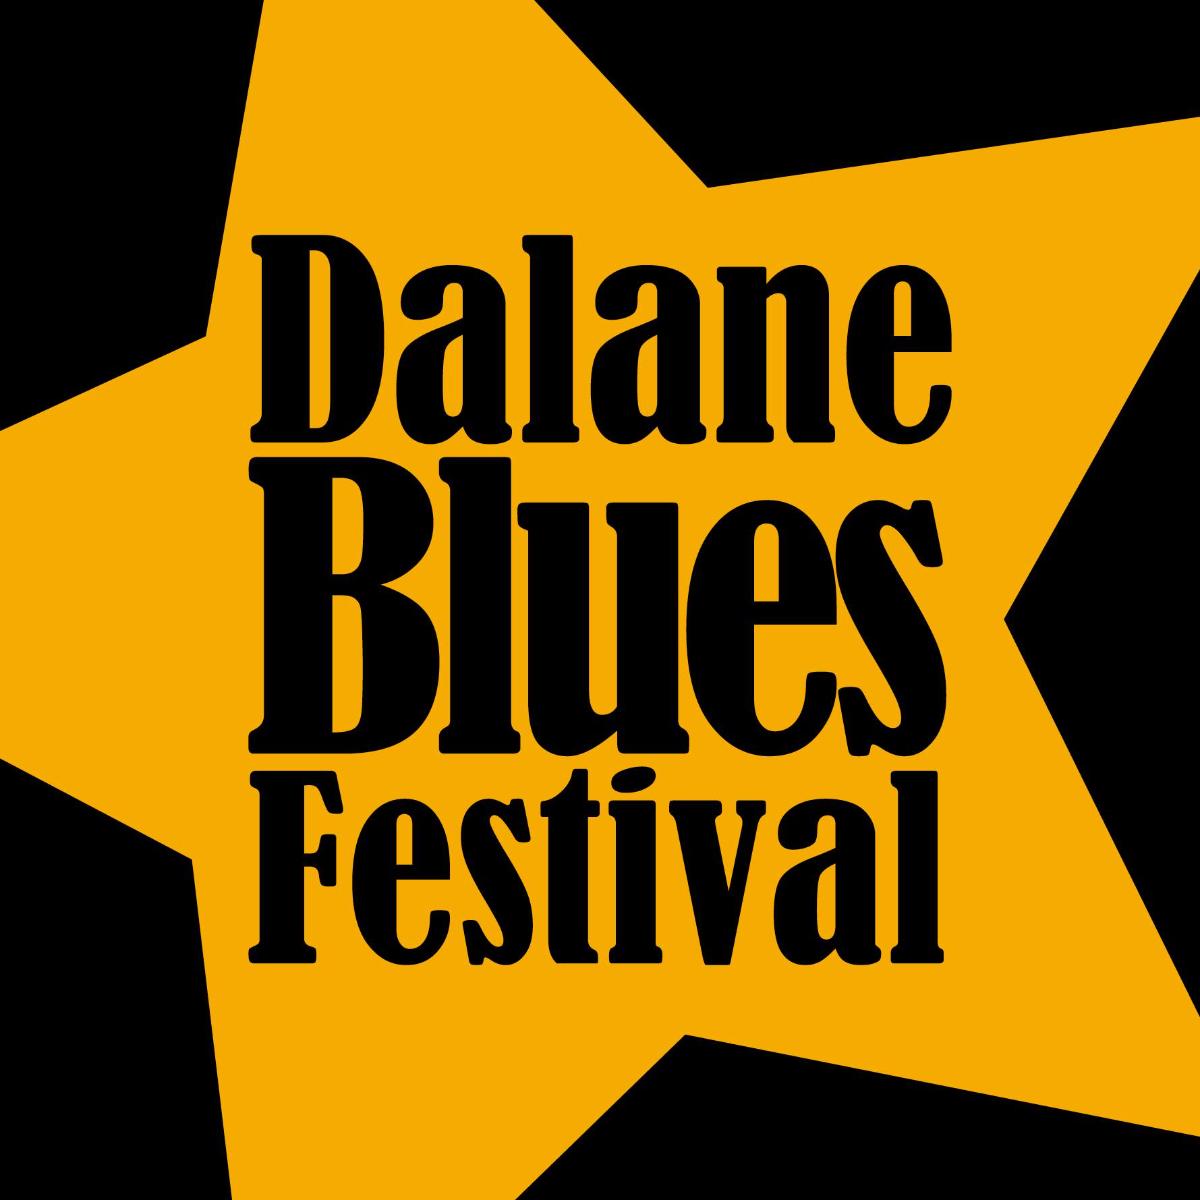 Dalane Blues Festival Festival Lineup, Dates and Location